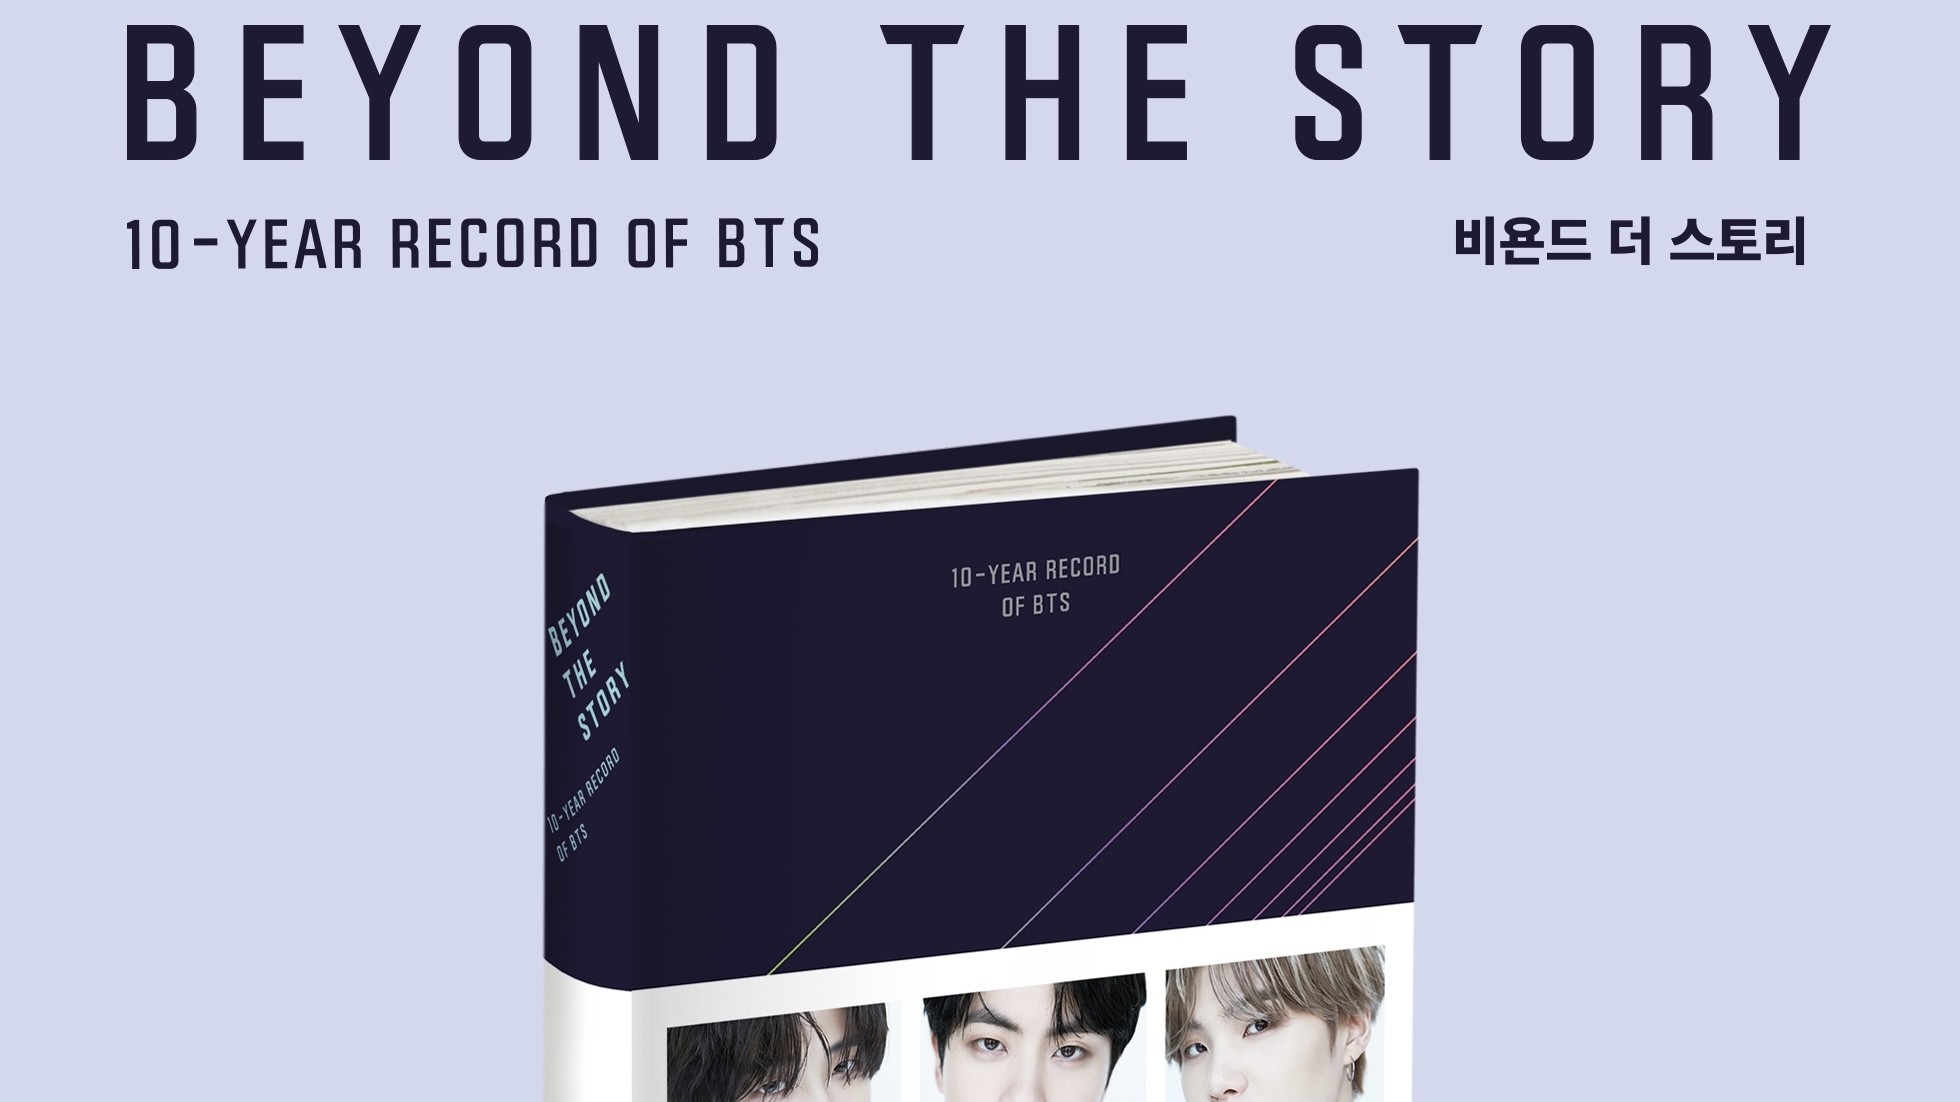 BTSの10年間の活動を特集した書籍「BEYOND THE STORY」の日本語版 